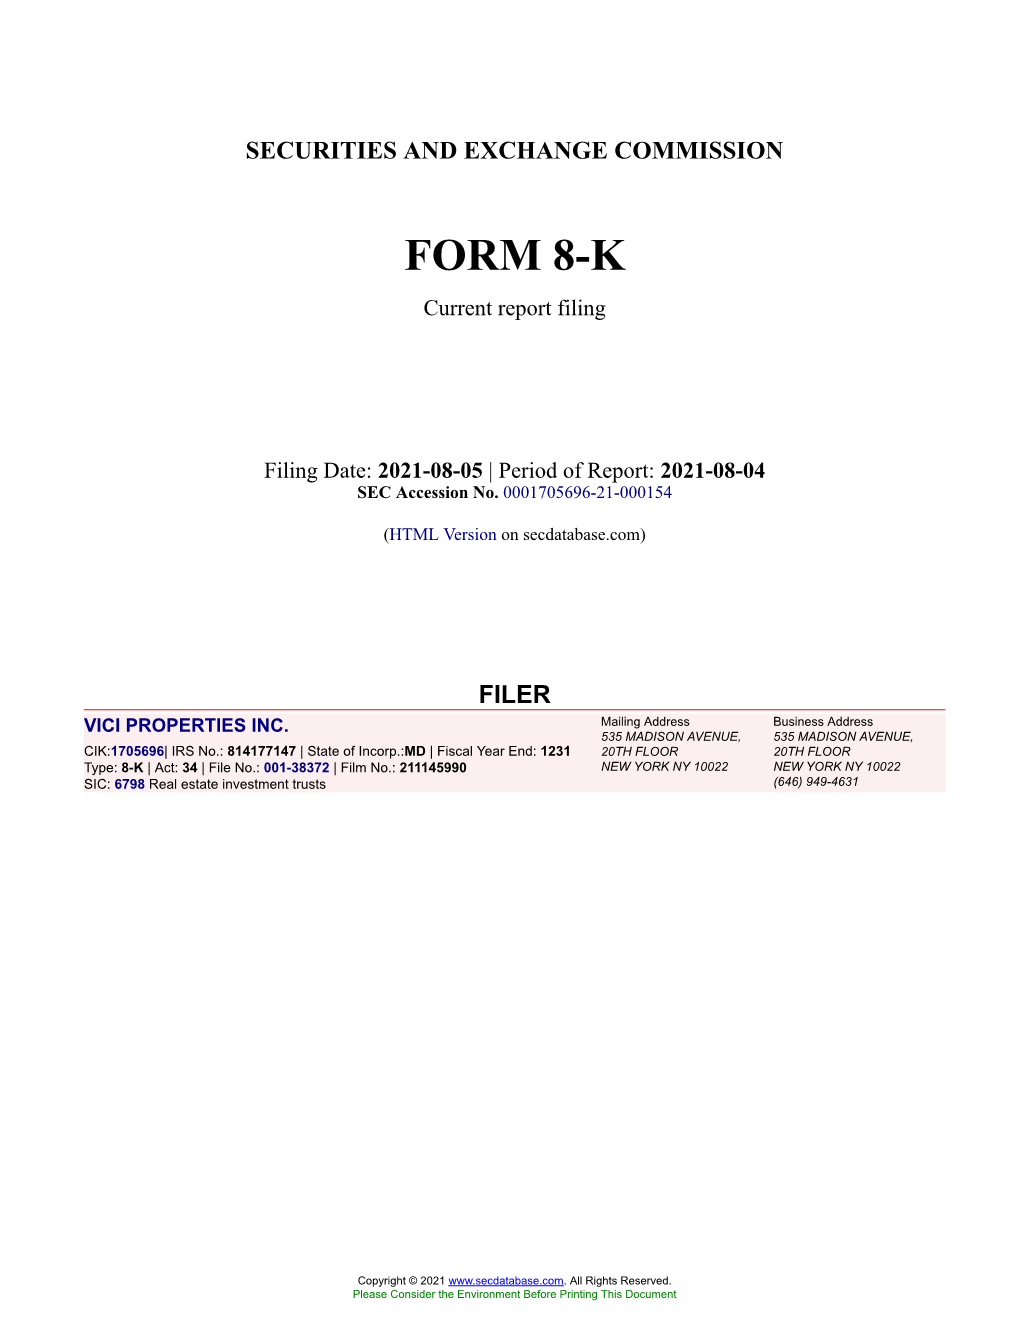 VICI PROPERTIES INC. Form 8-K Current Event